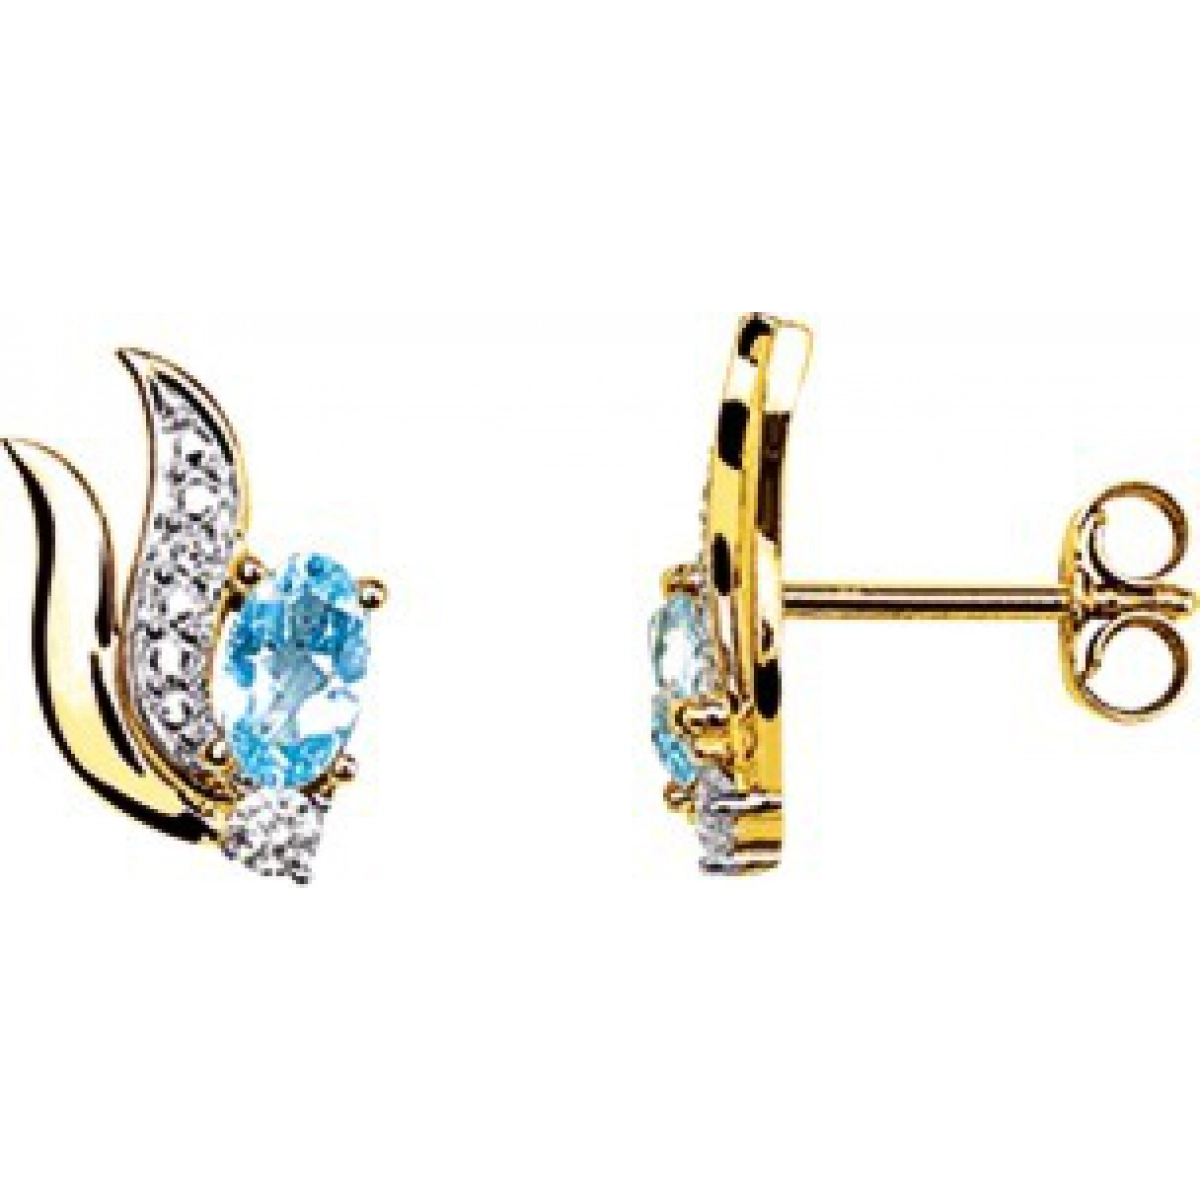 Earrings pair treated Blue Topaz + cz 9K YG  Lua Blanca  293062.T3.0